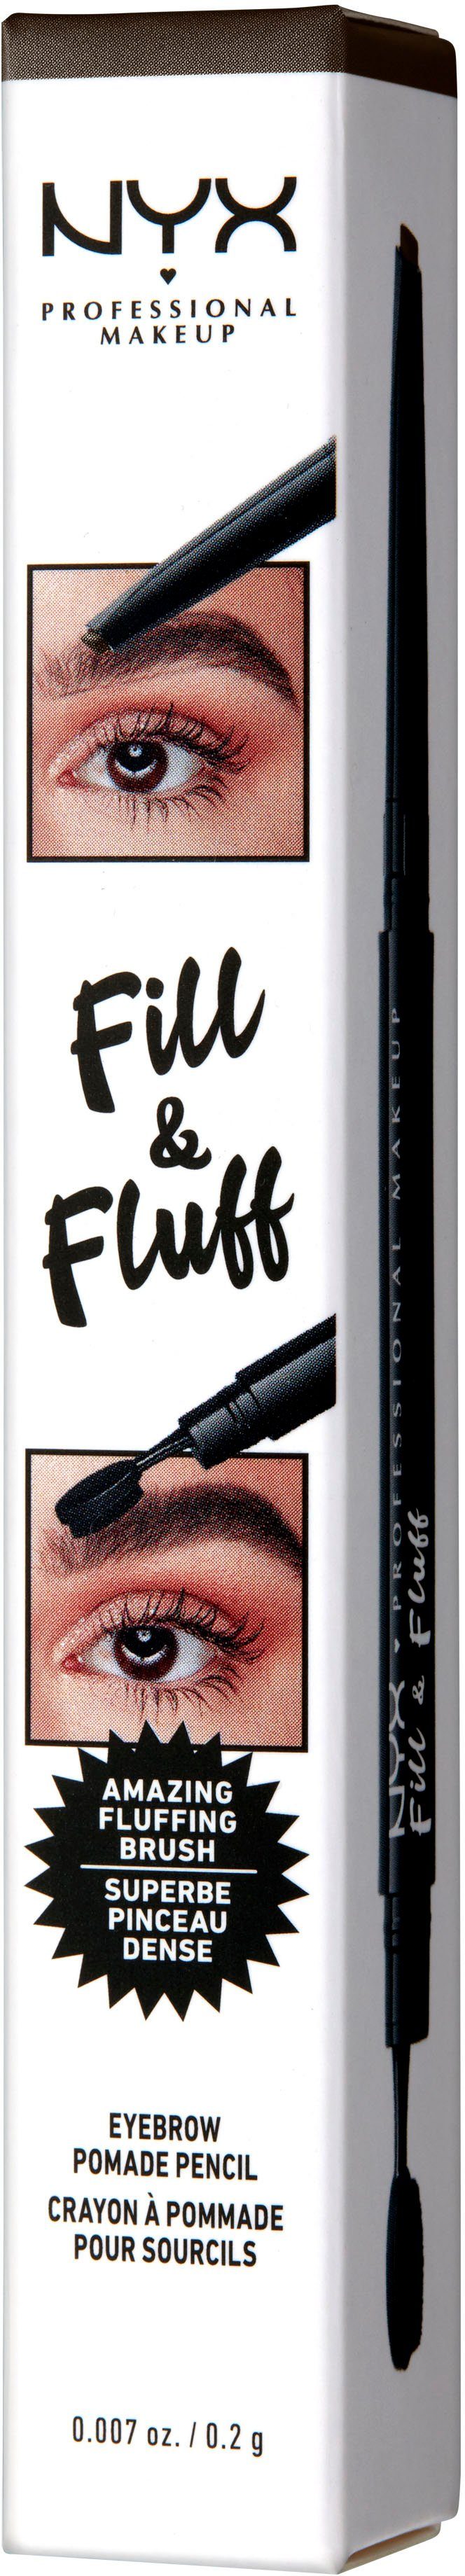 NYX Augenbrauen-Stift Fluff Fill Pencil espresso & Makeup Professional Eyebrow Pomade